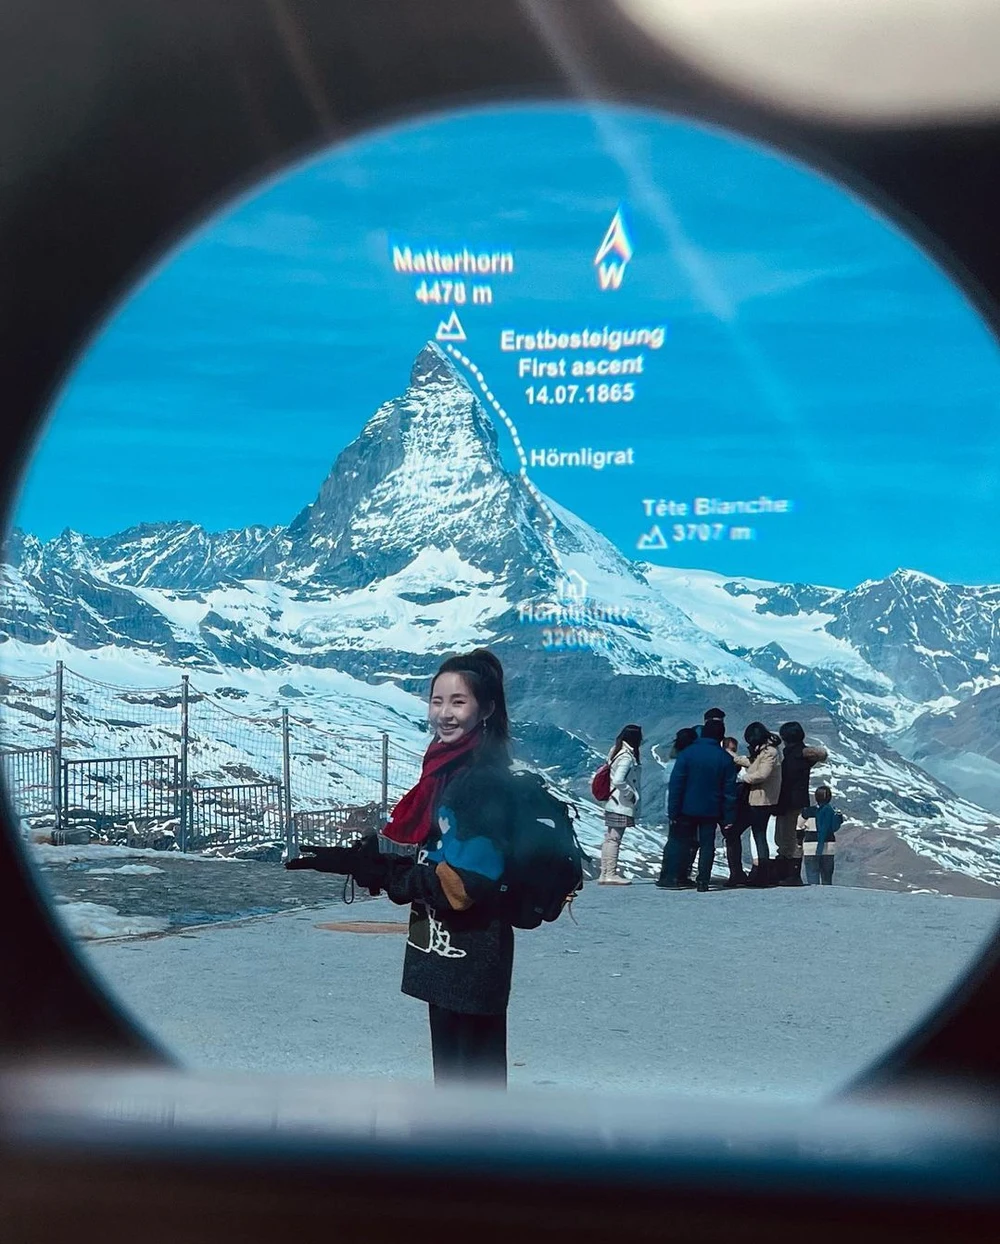 The Matterhorn best place to visit in Switzerland